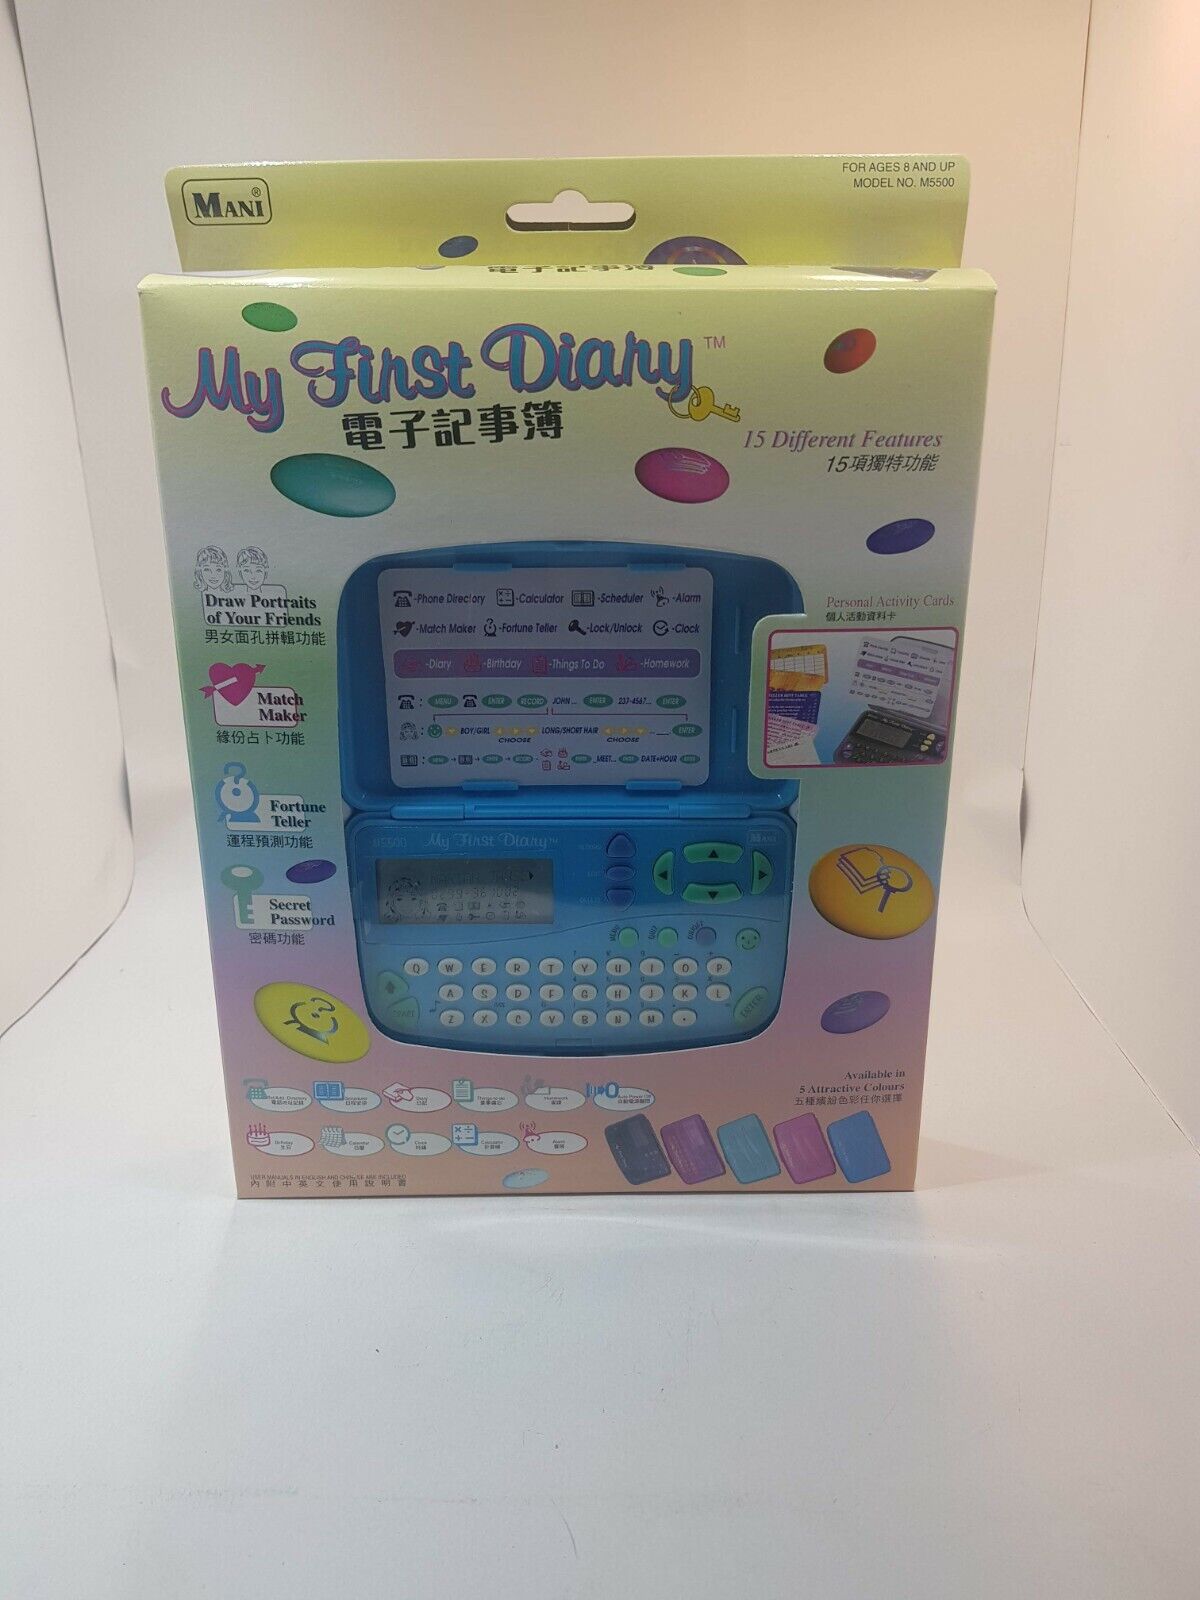 RARE brand new Retro Pocket Organizer Digital Diary by Mani m5500 - blue